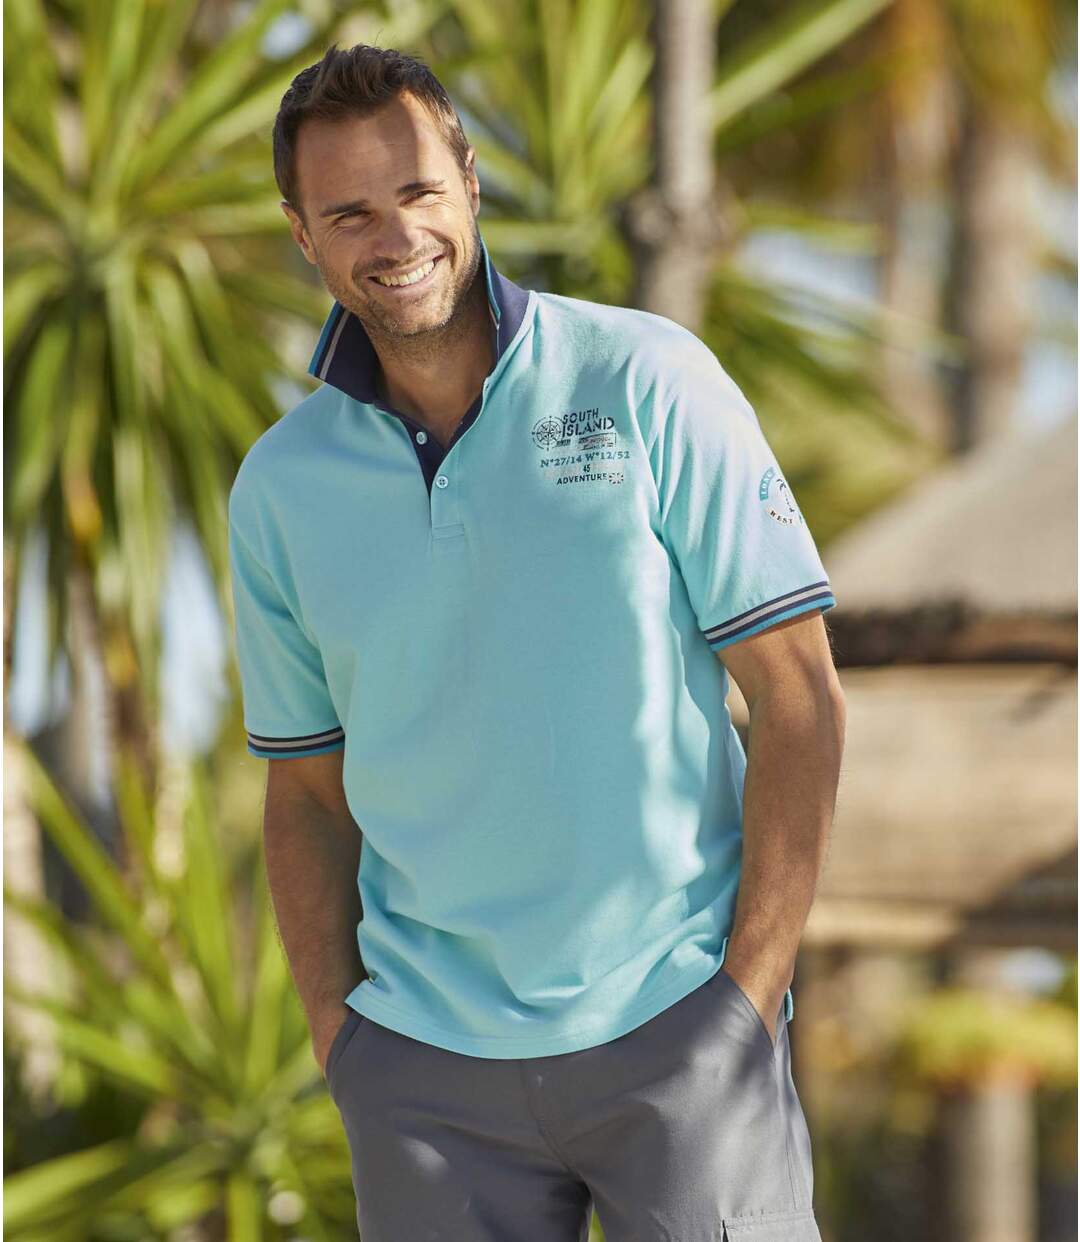 Pack of 2 Men's Piqué Polo Shirts - Navy Turquoise Atlas For Men